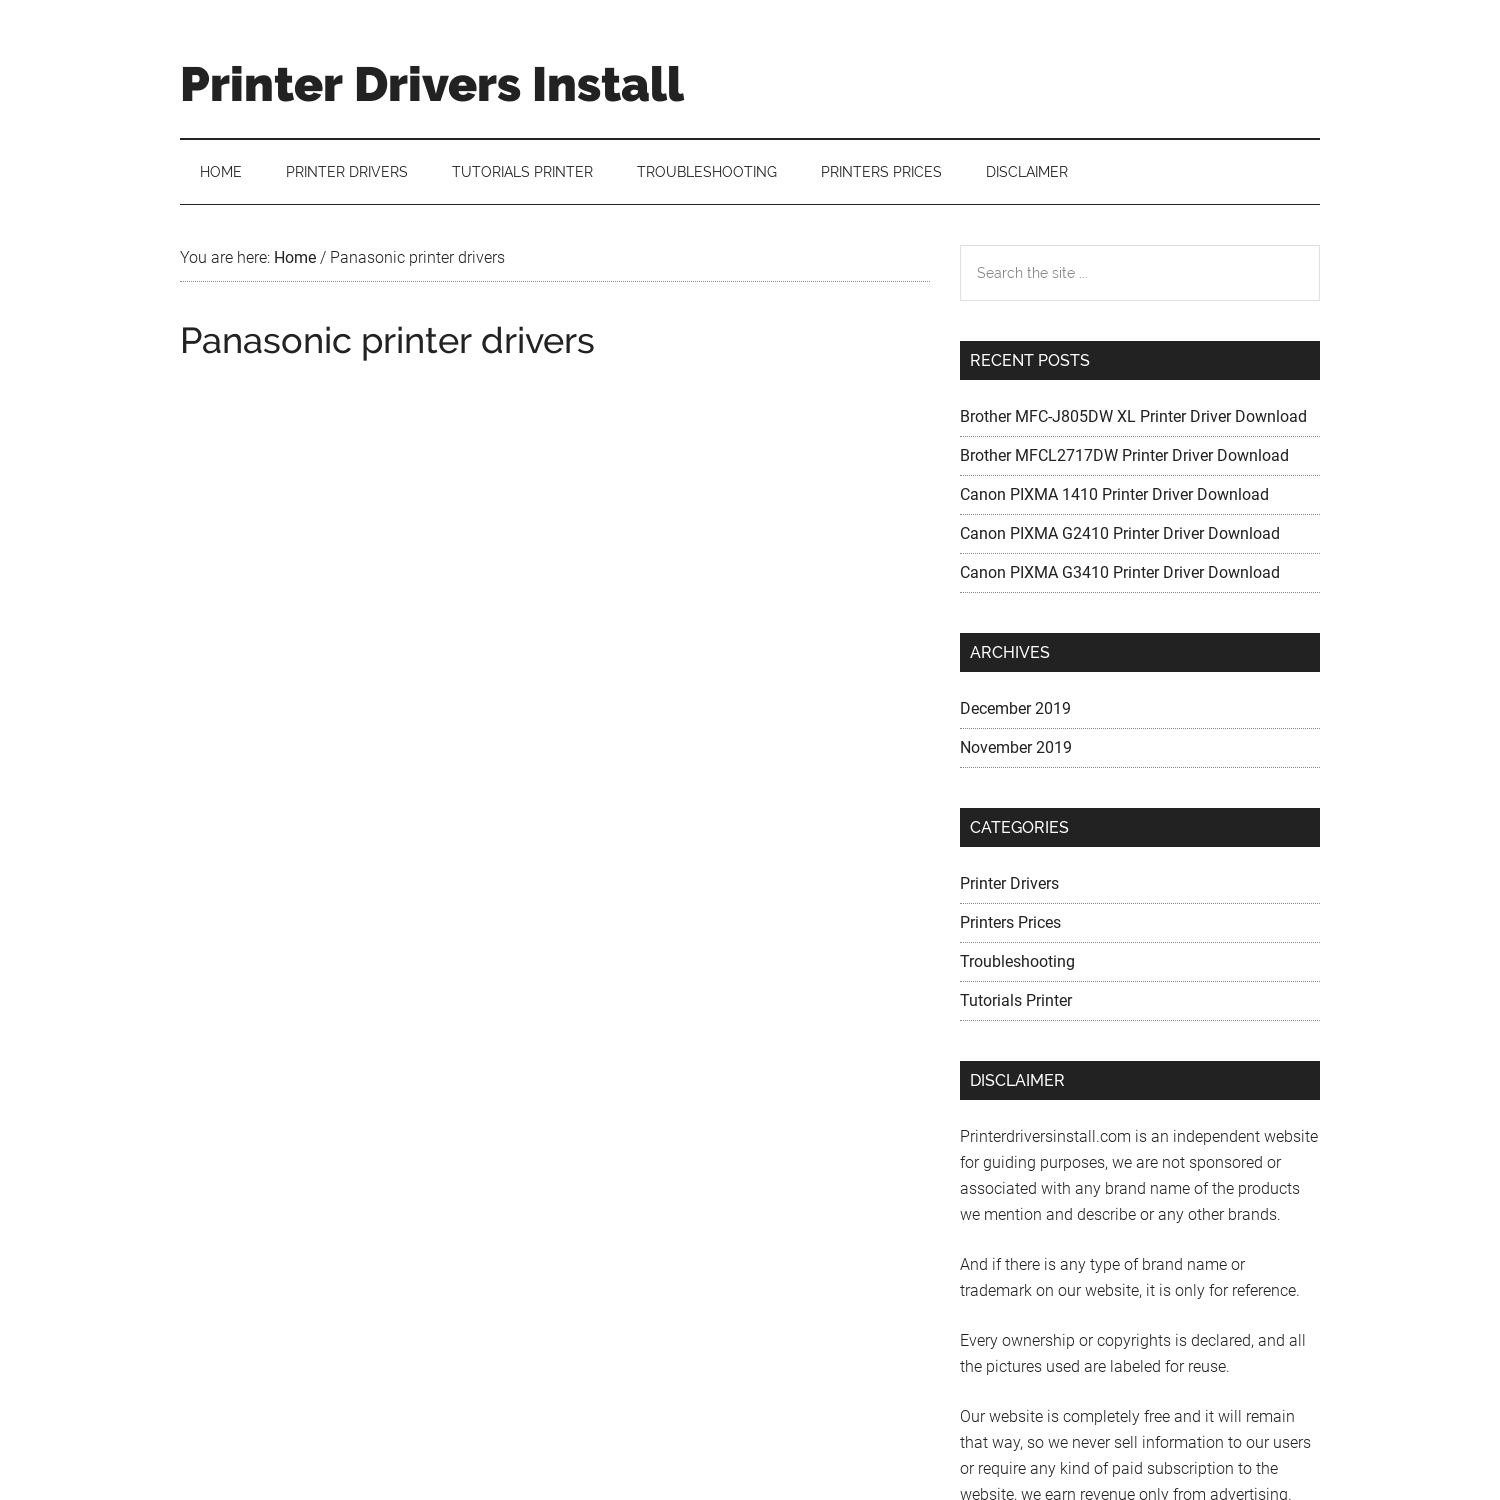 Panasonic printer drivers - Printer Drivers Install